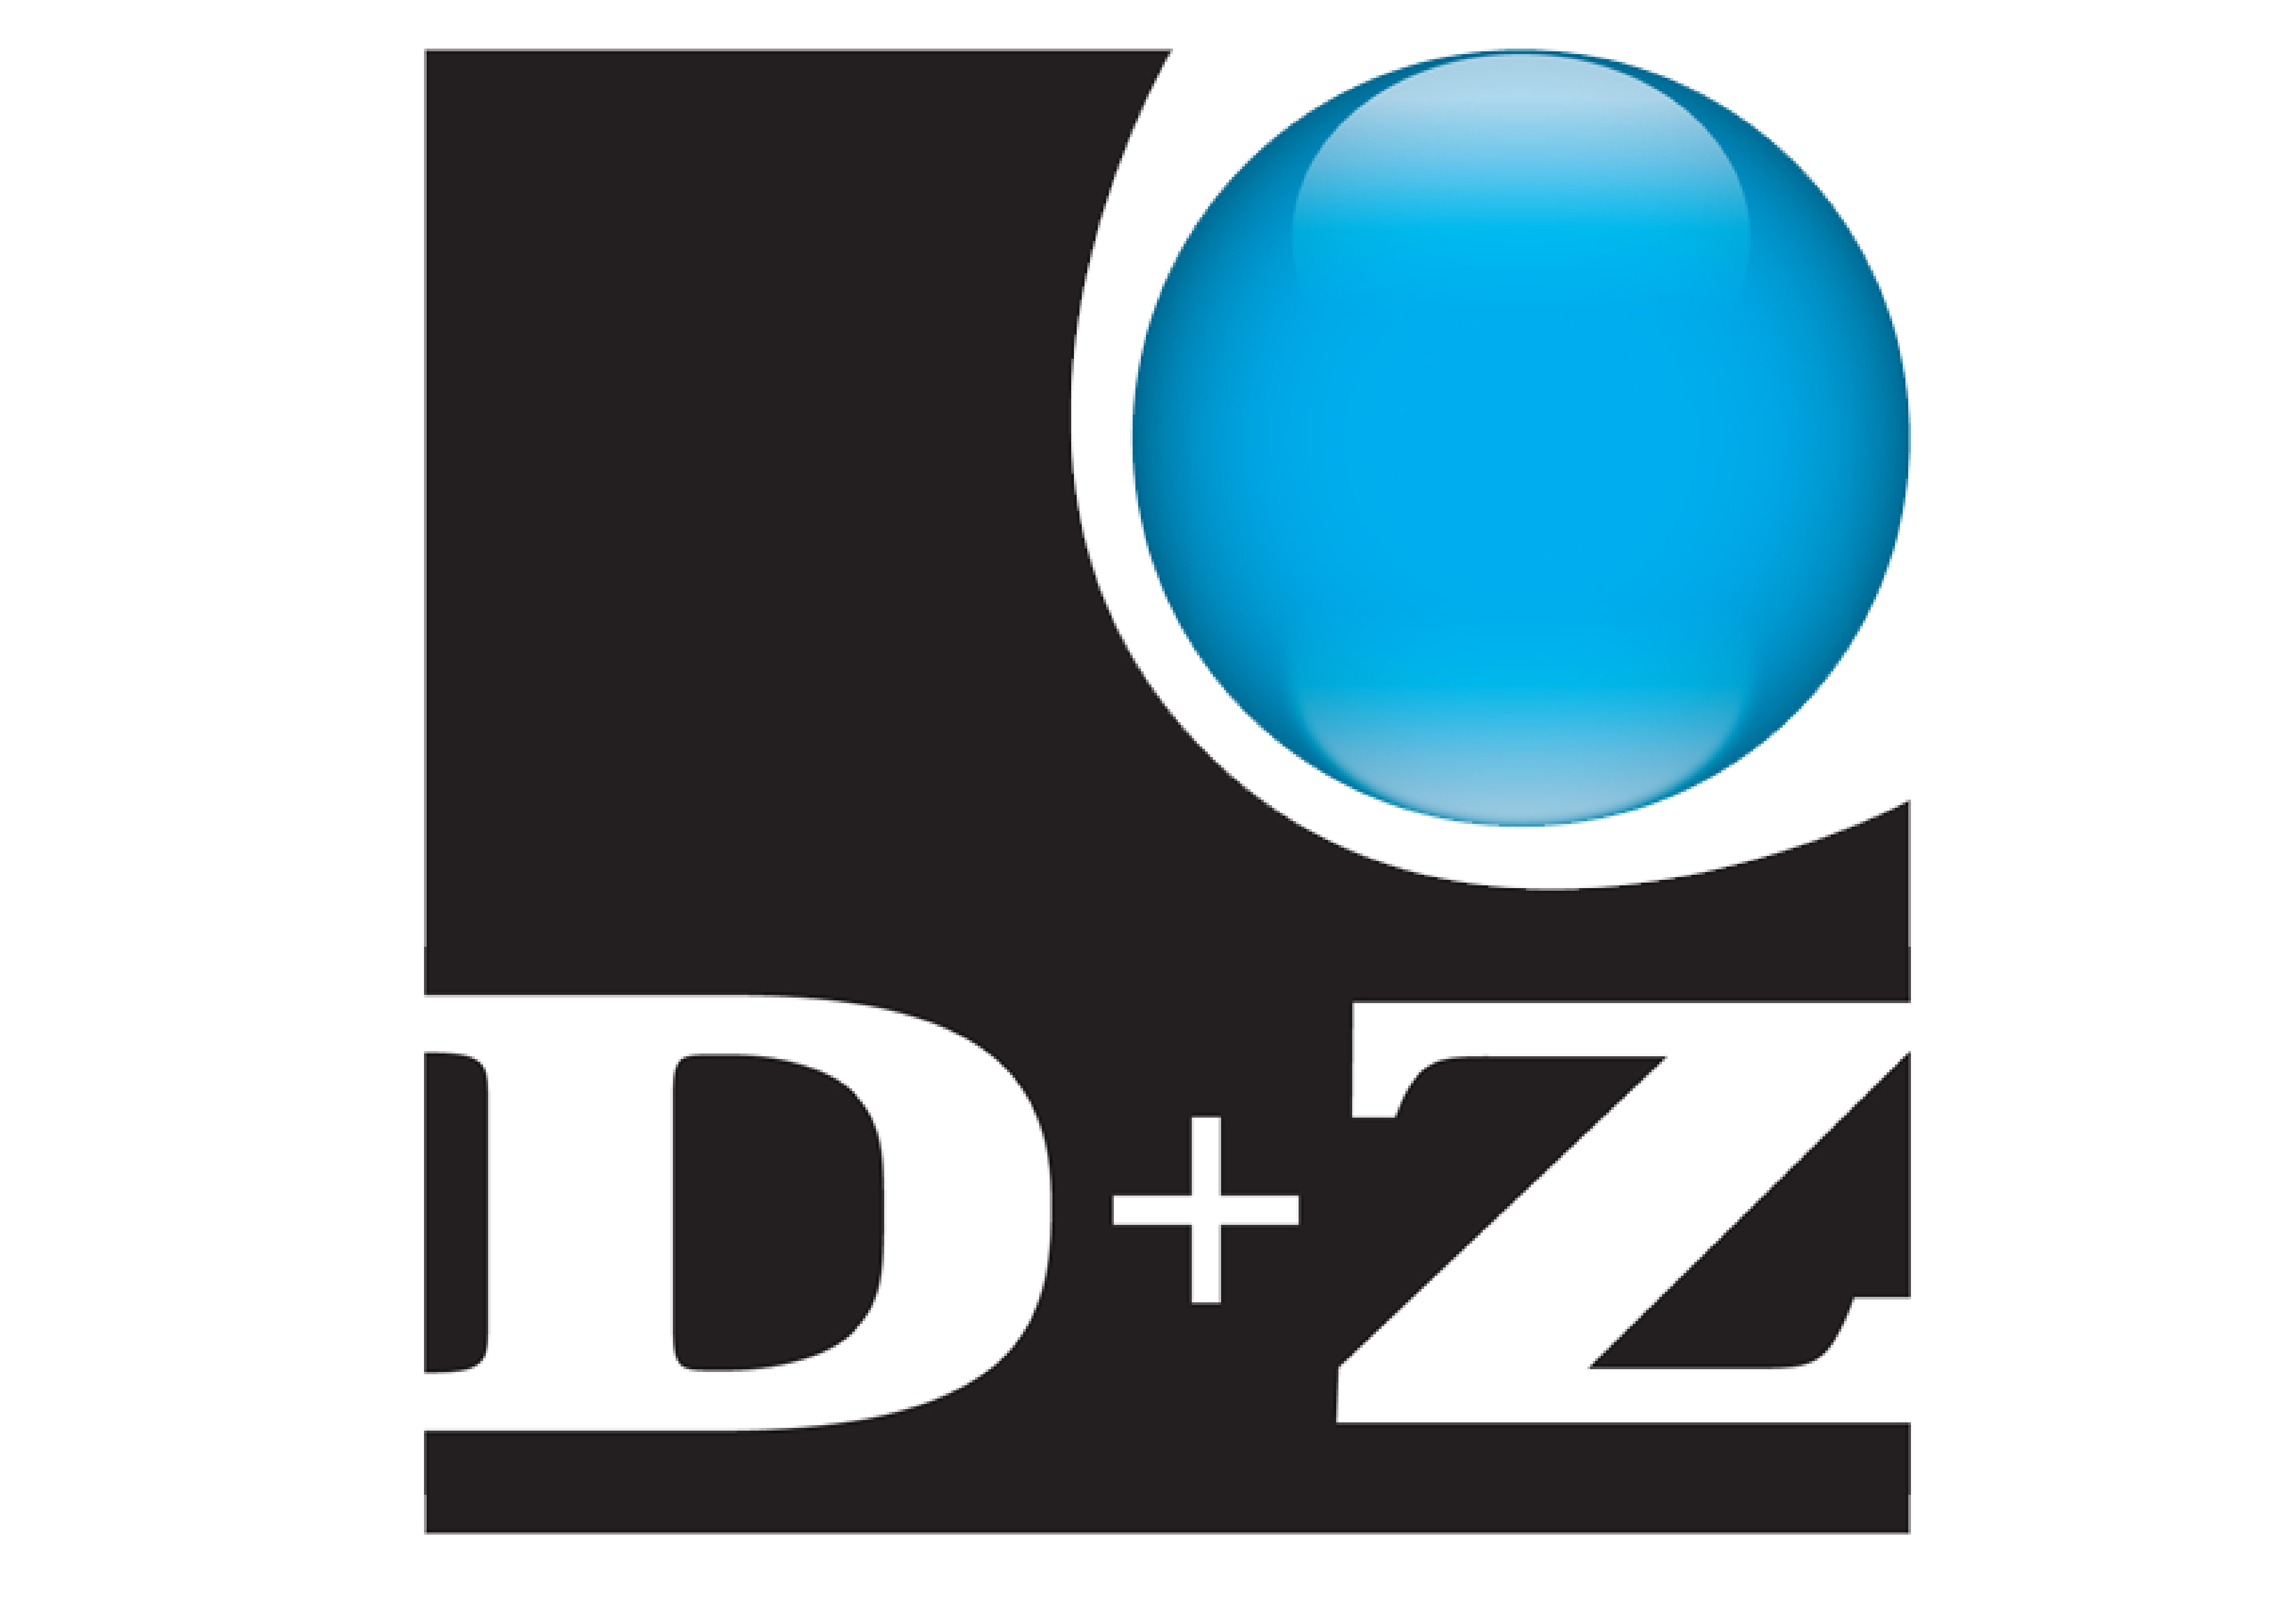 D+Z